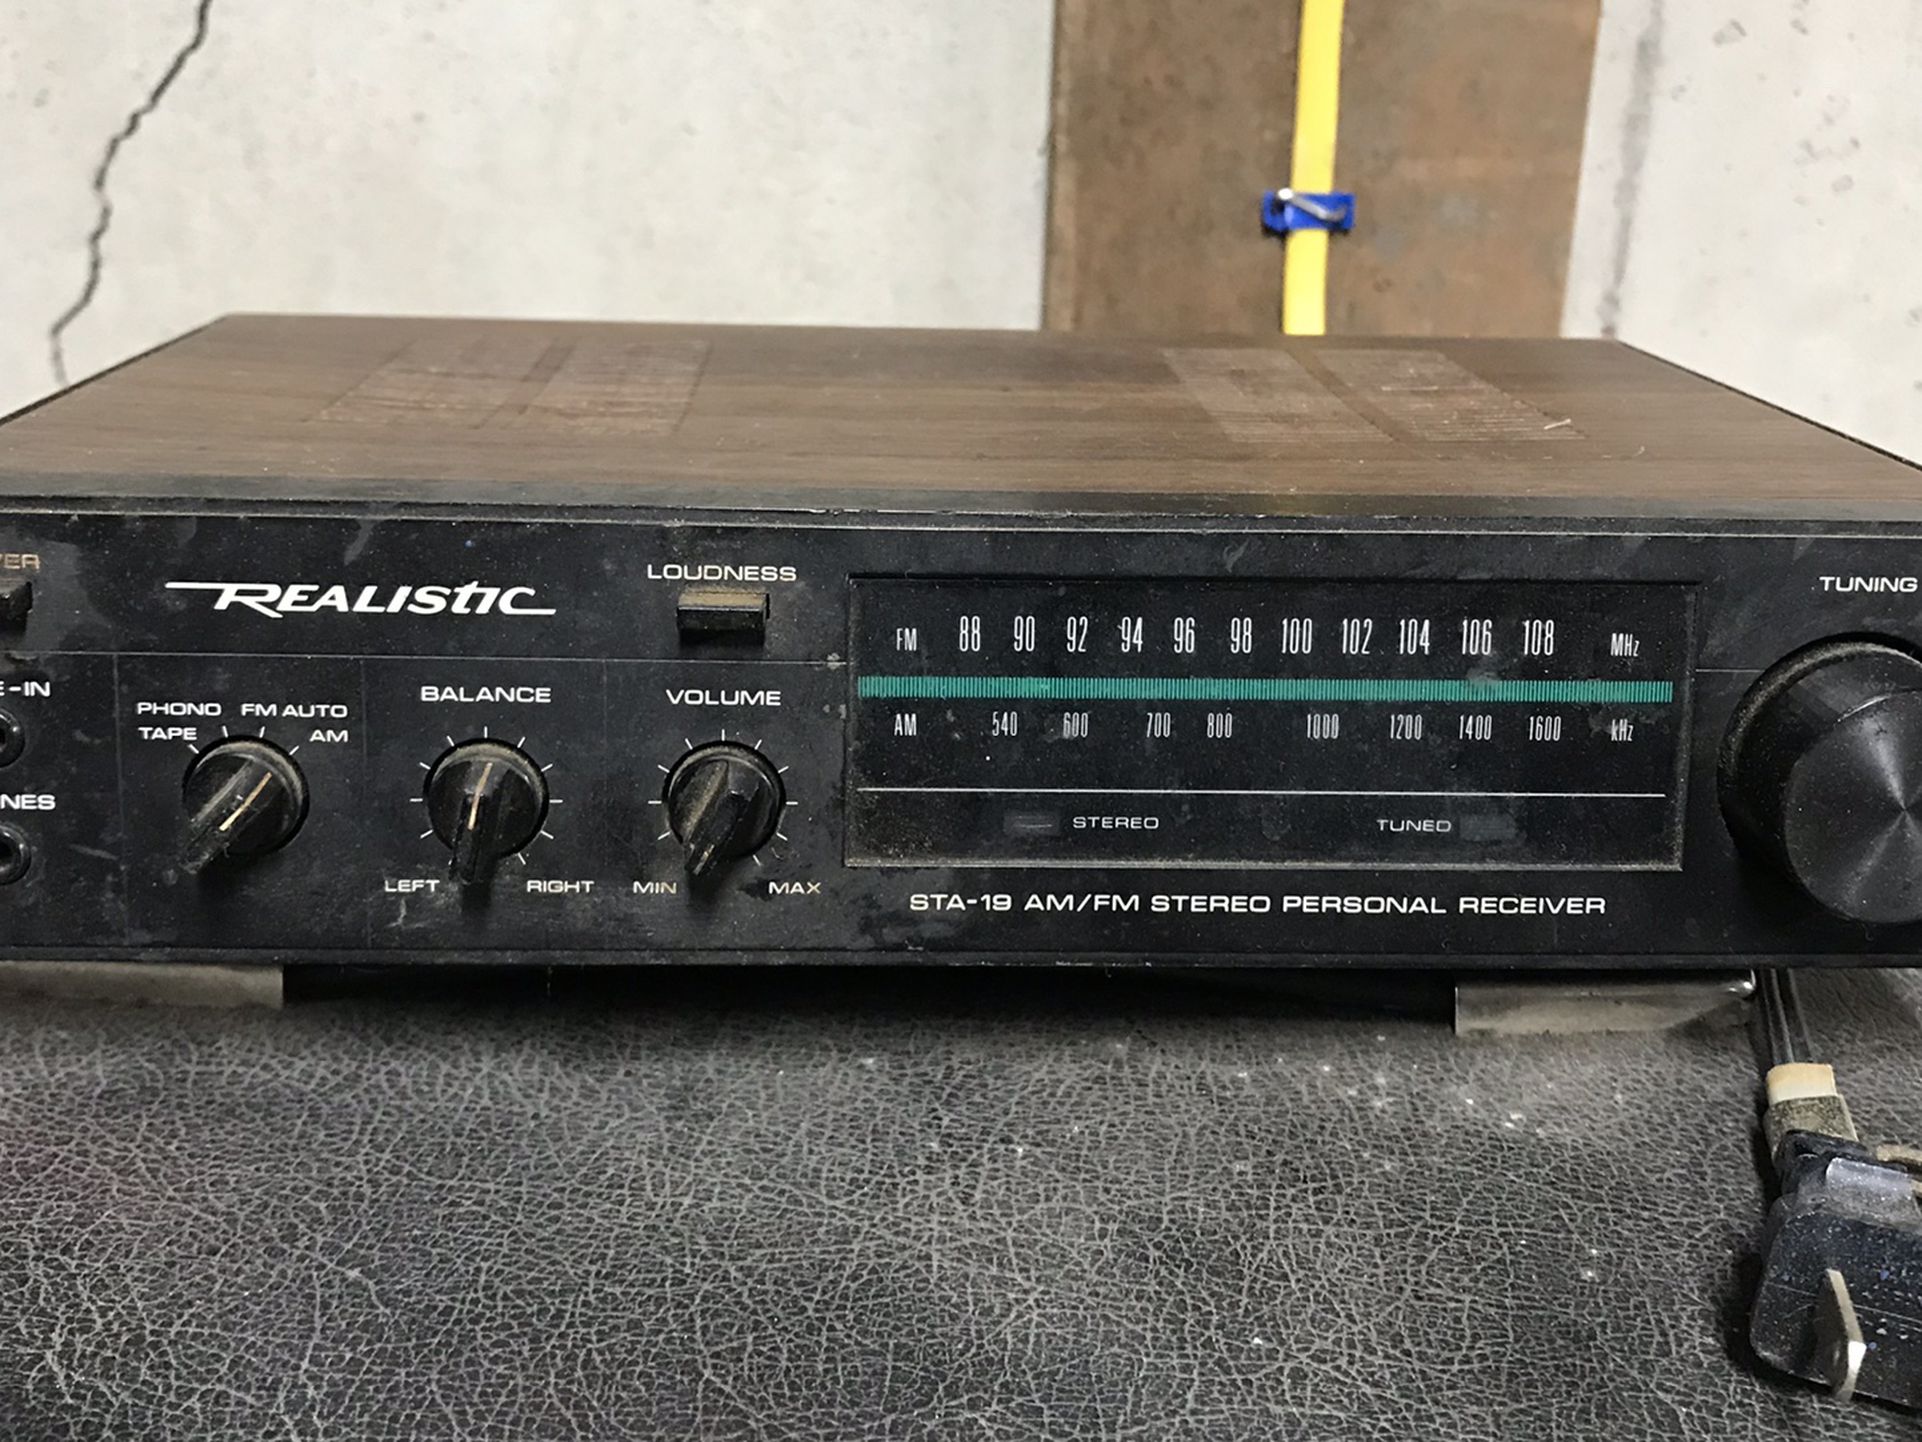 RadioShack Realistic receiver